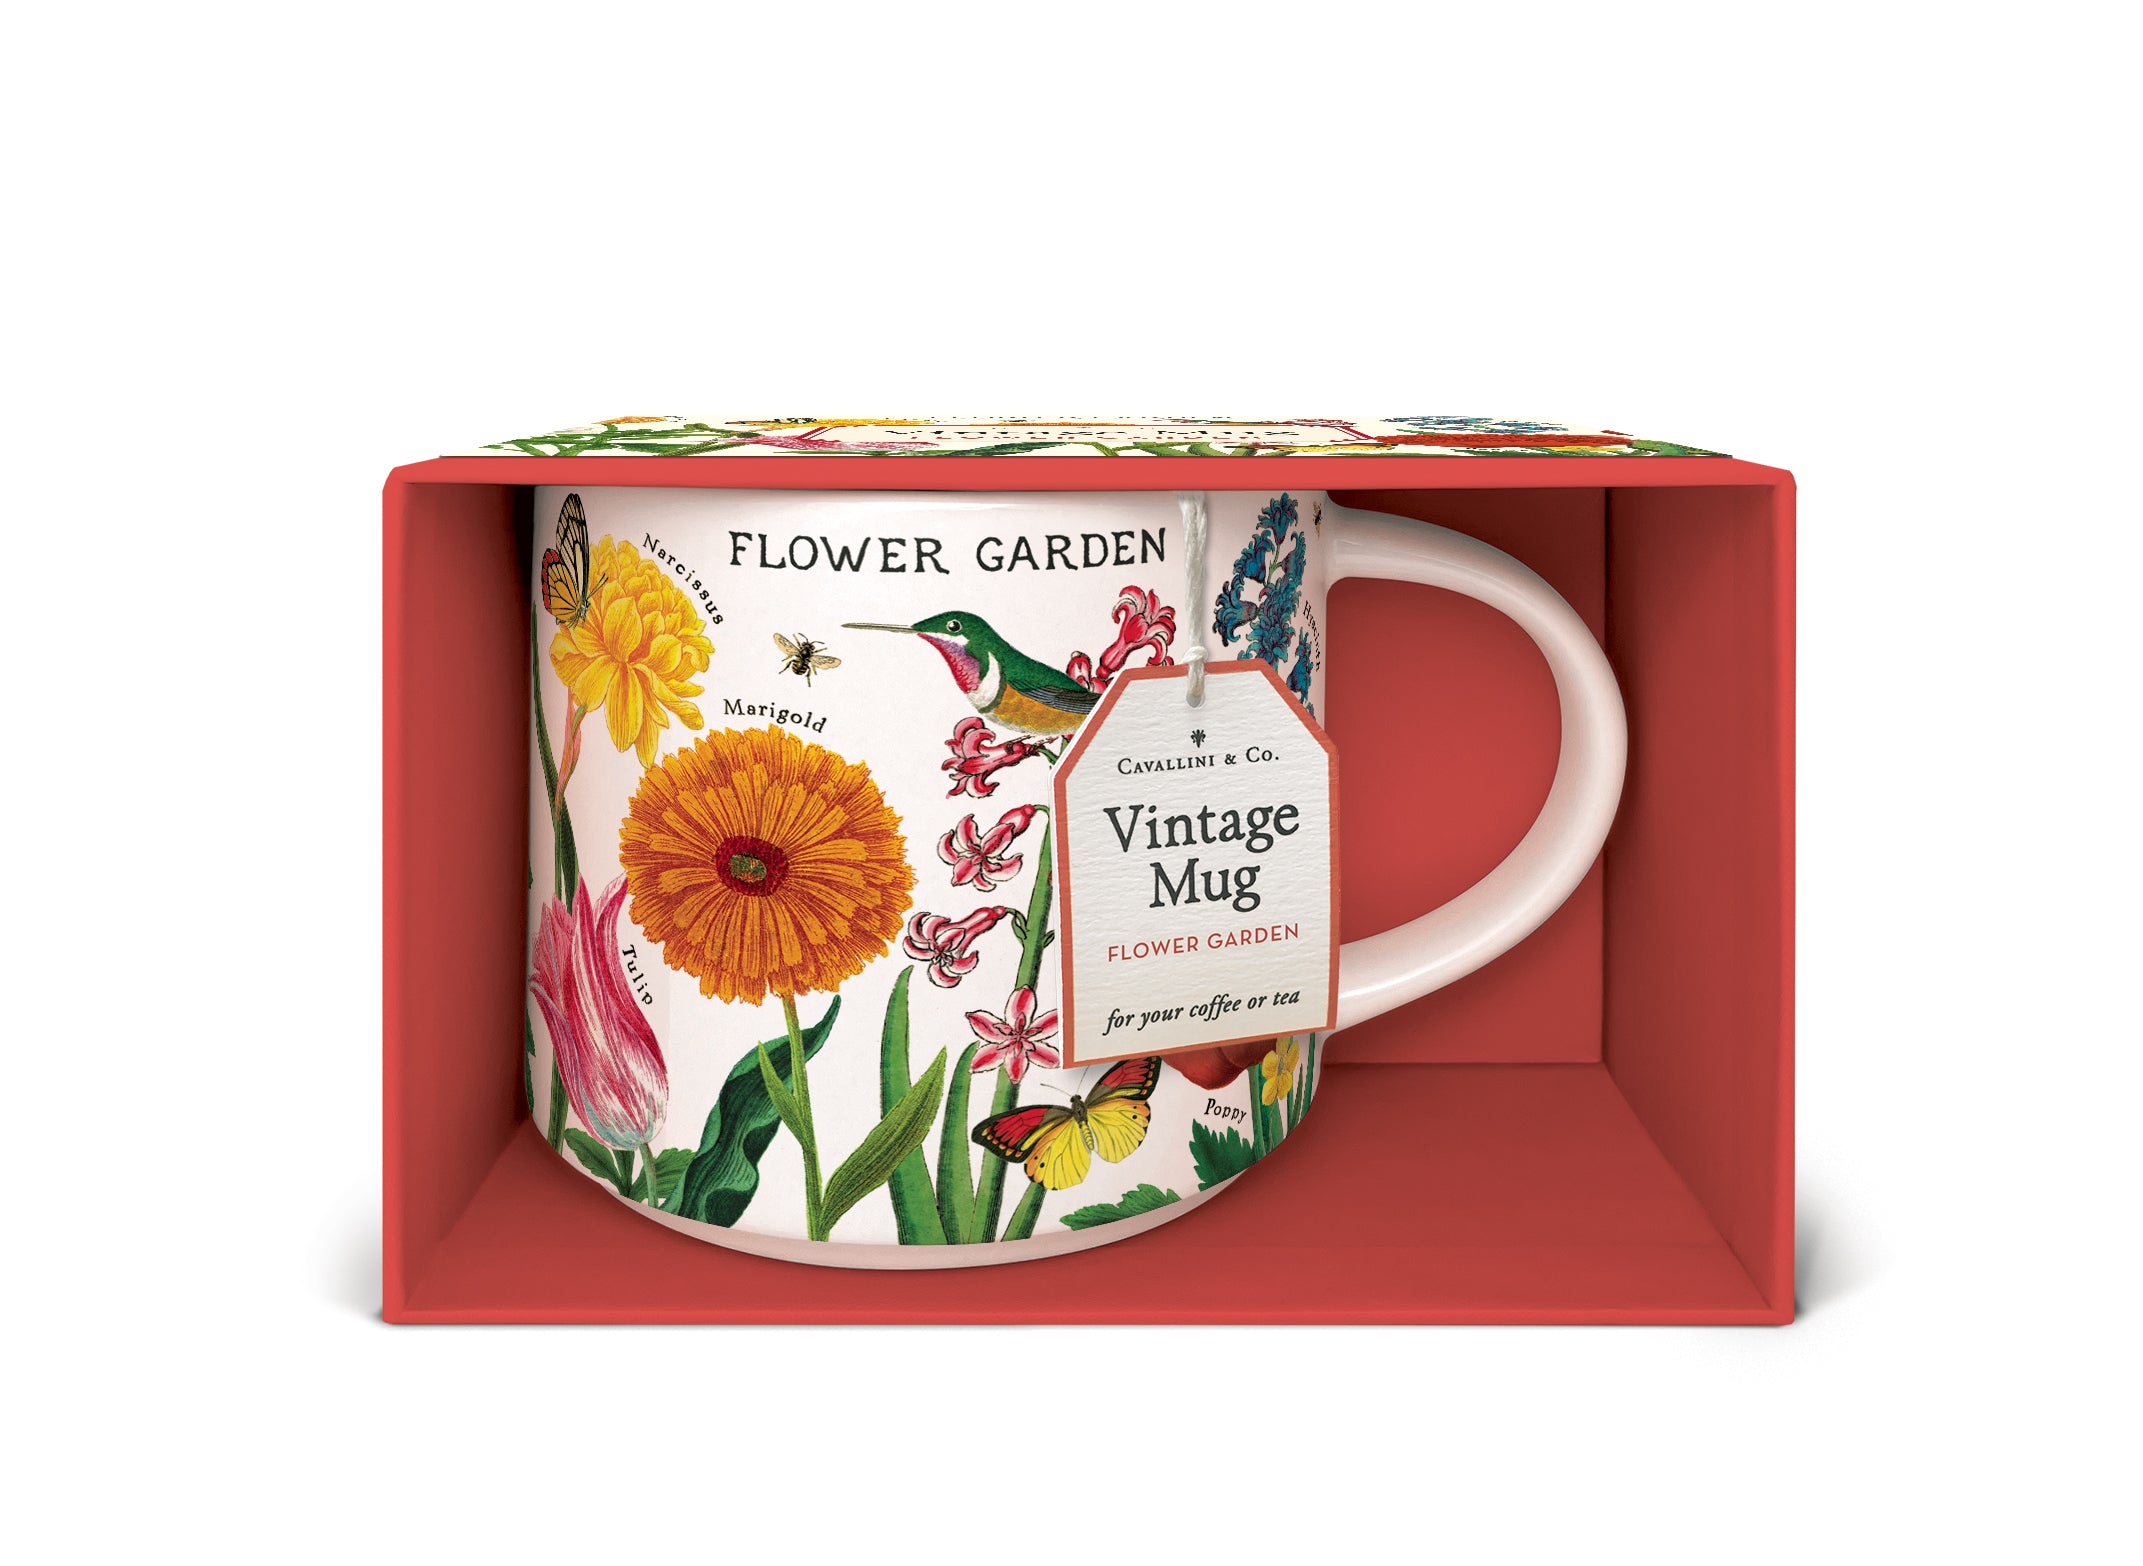 Image of Cavallini & Co. Flower Garden Ceramic Mug in open box